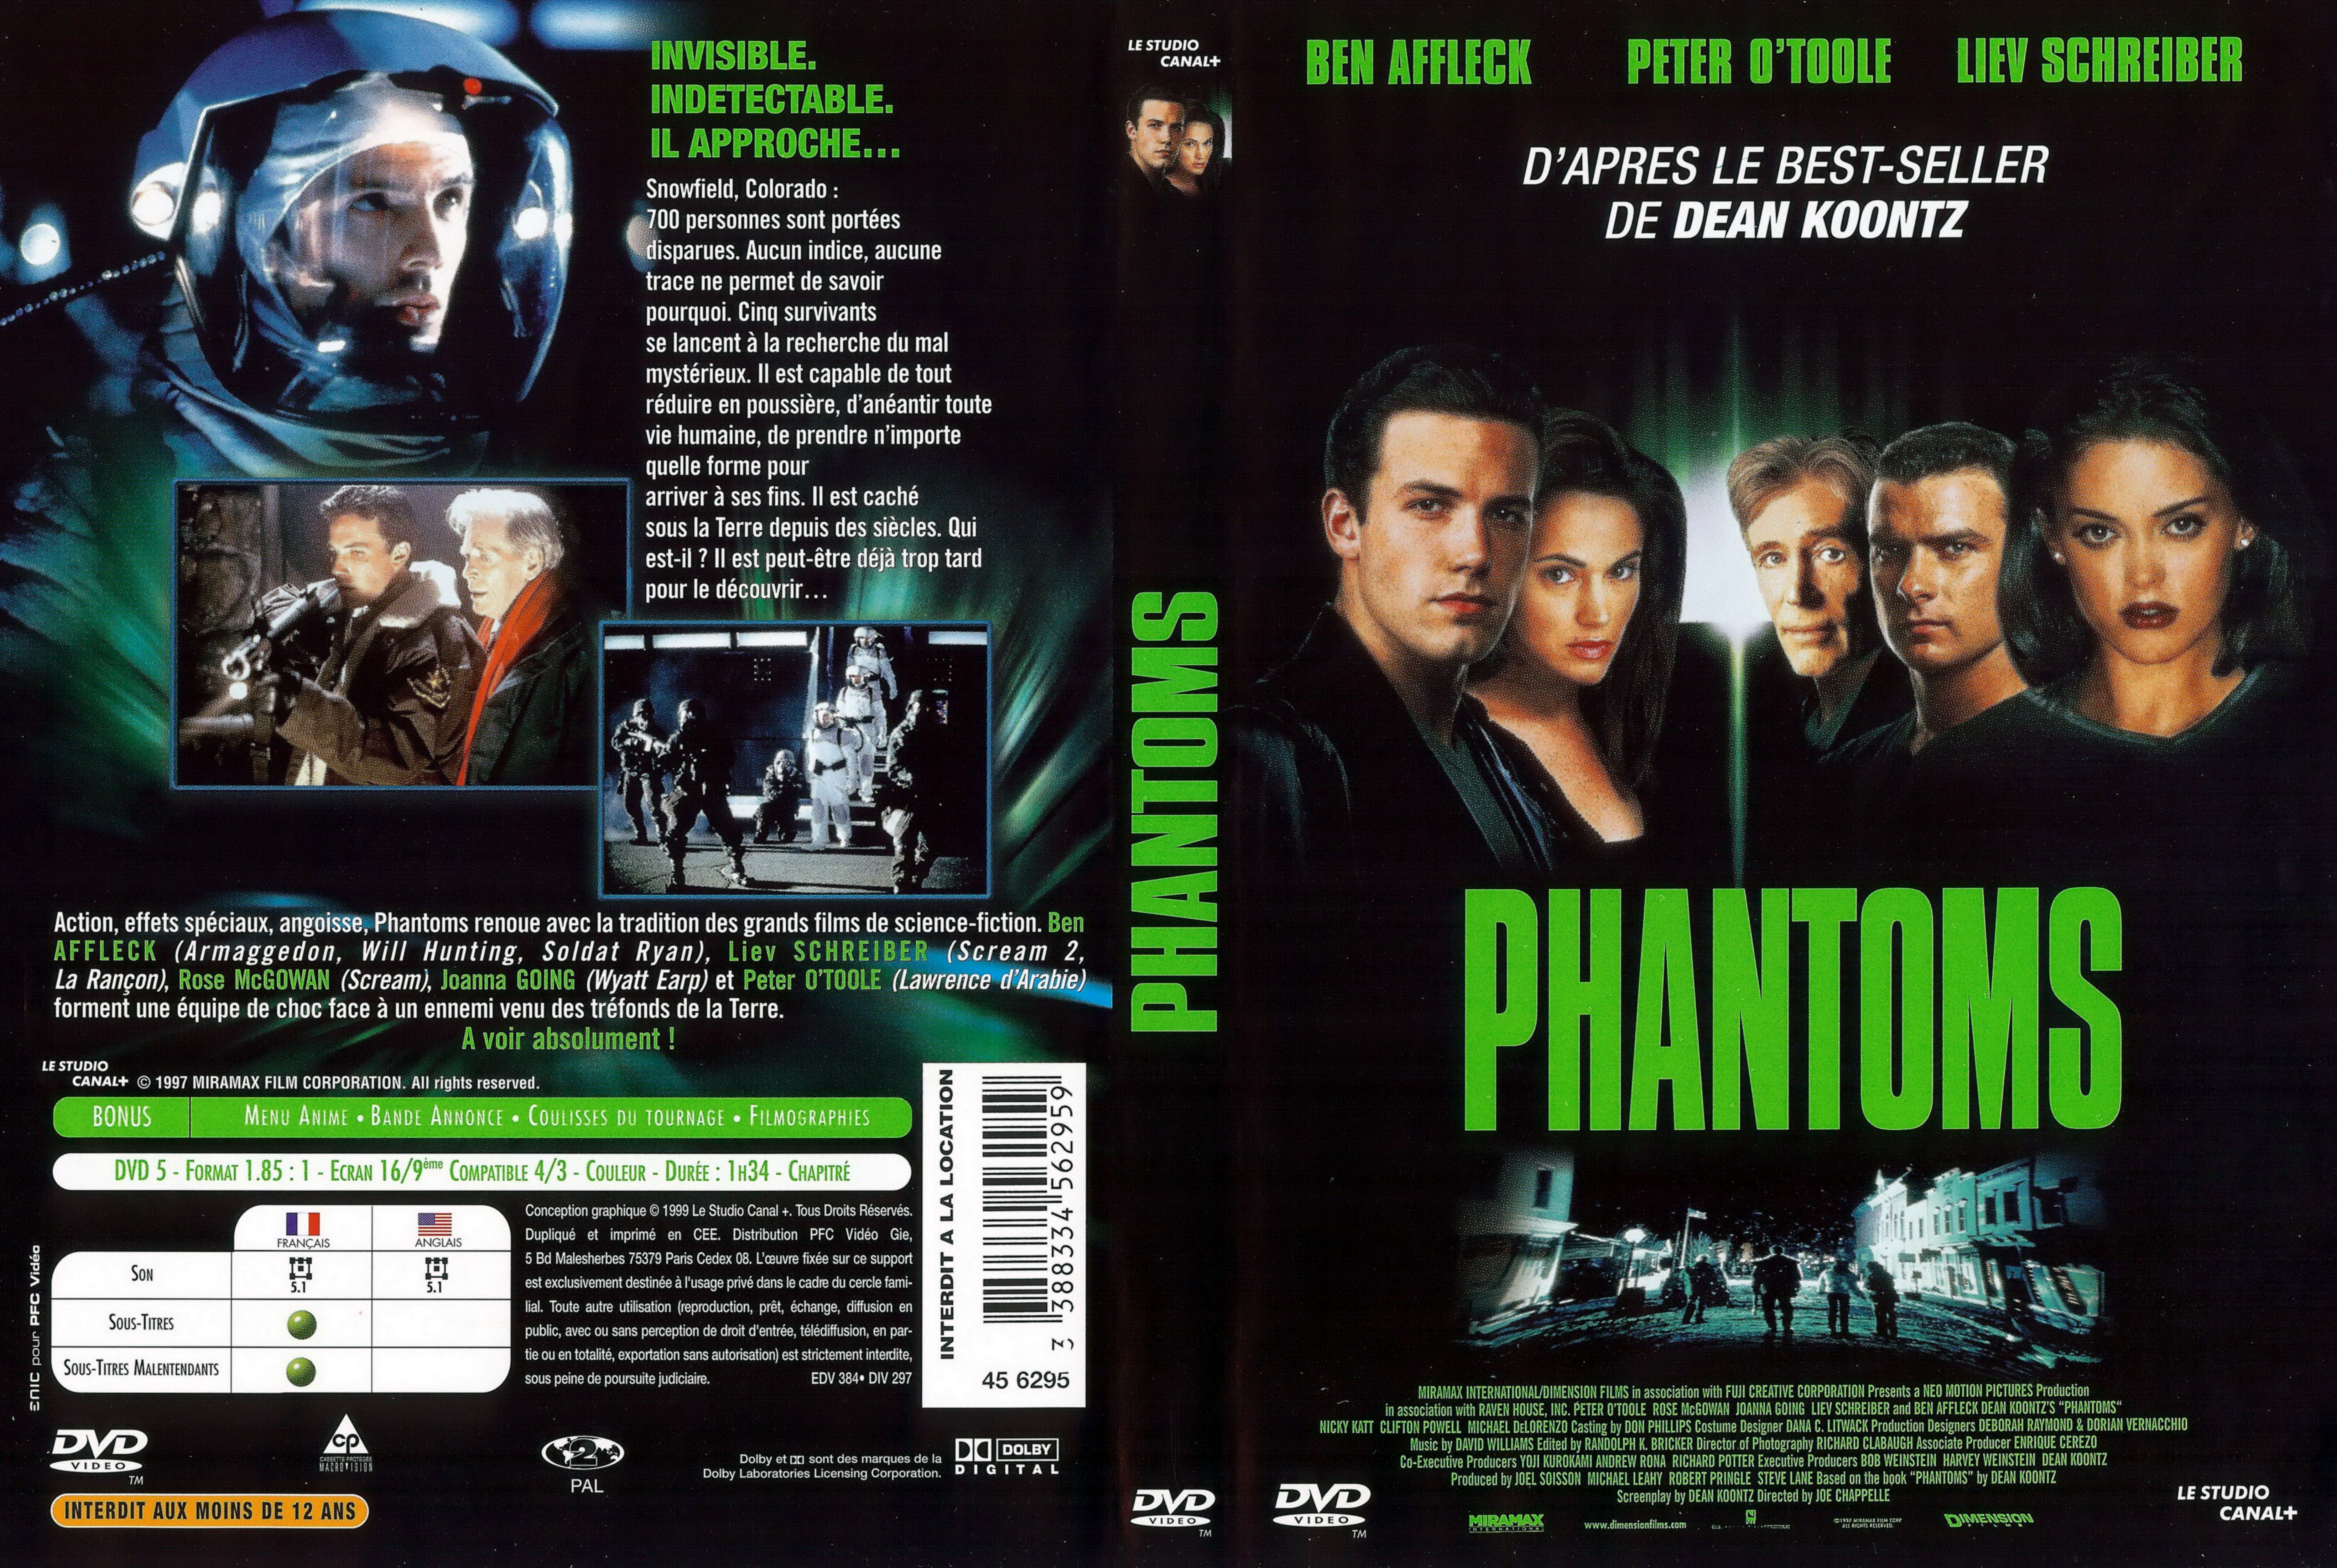 Jaquette DVD Phantoms v3